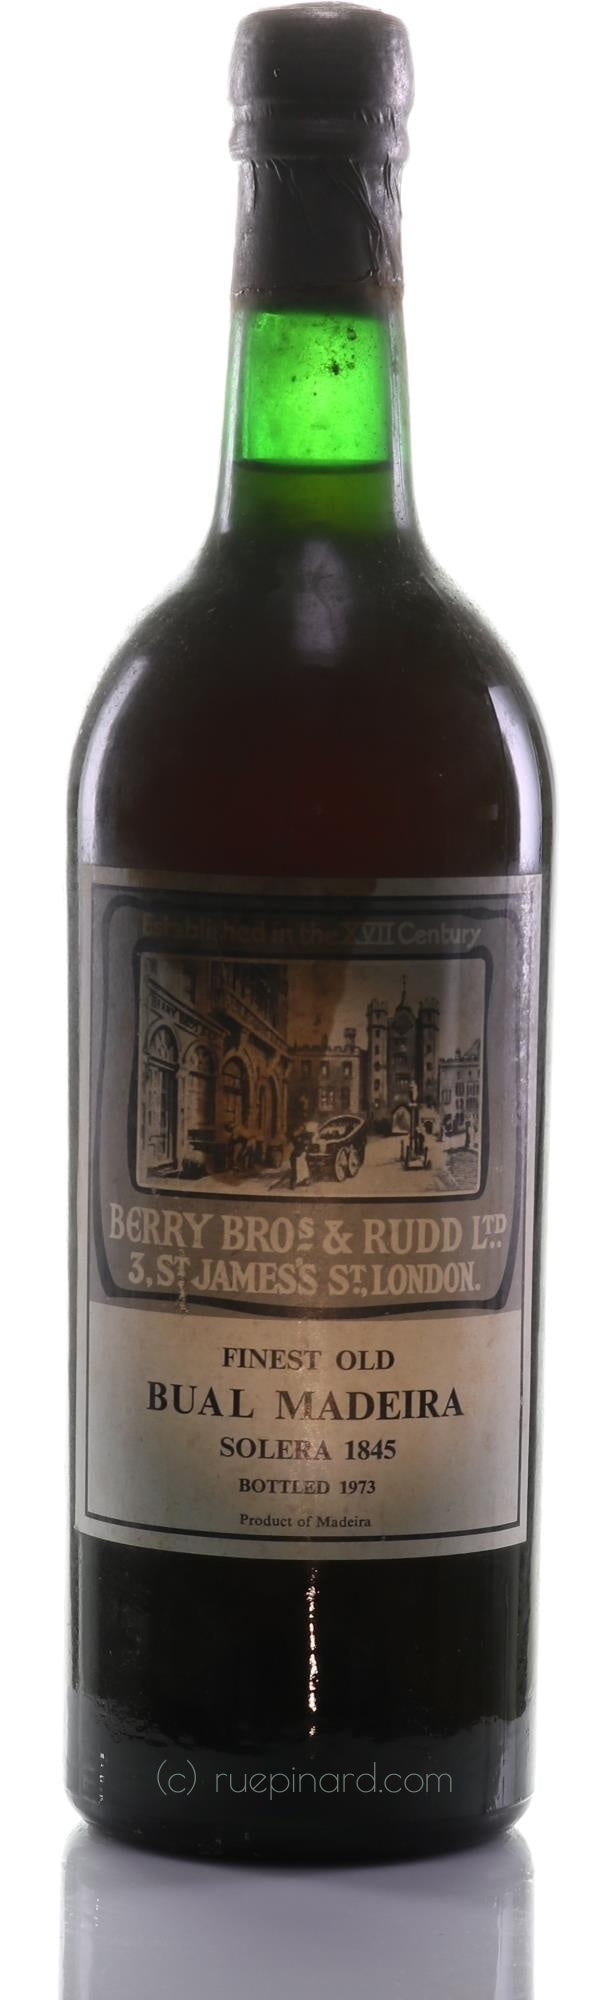 Berry Bros. & Rudd Madeira 1845 Bual Solera - Rue Pinard